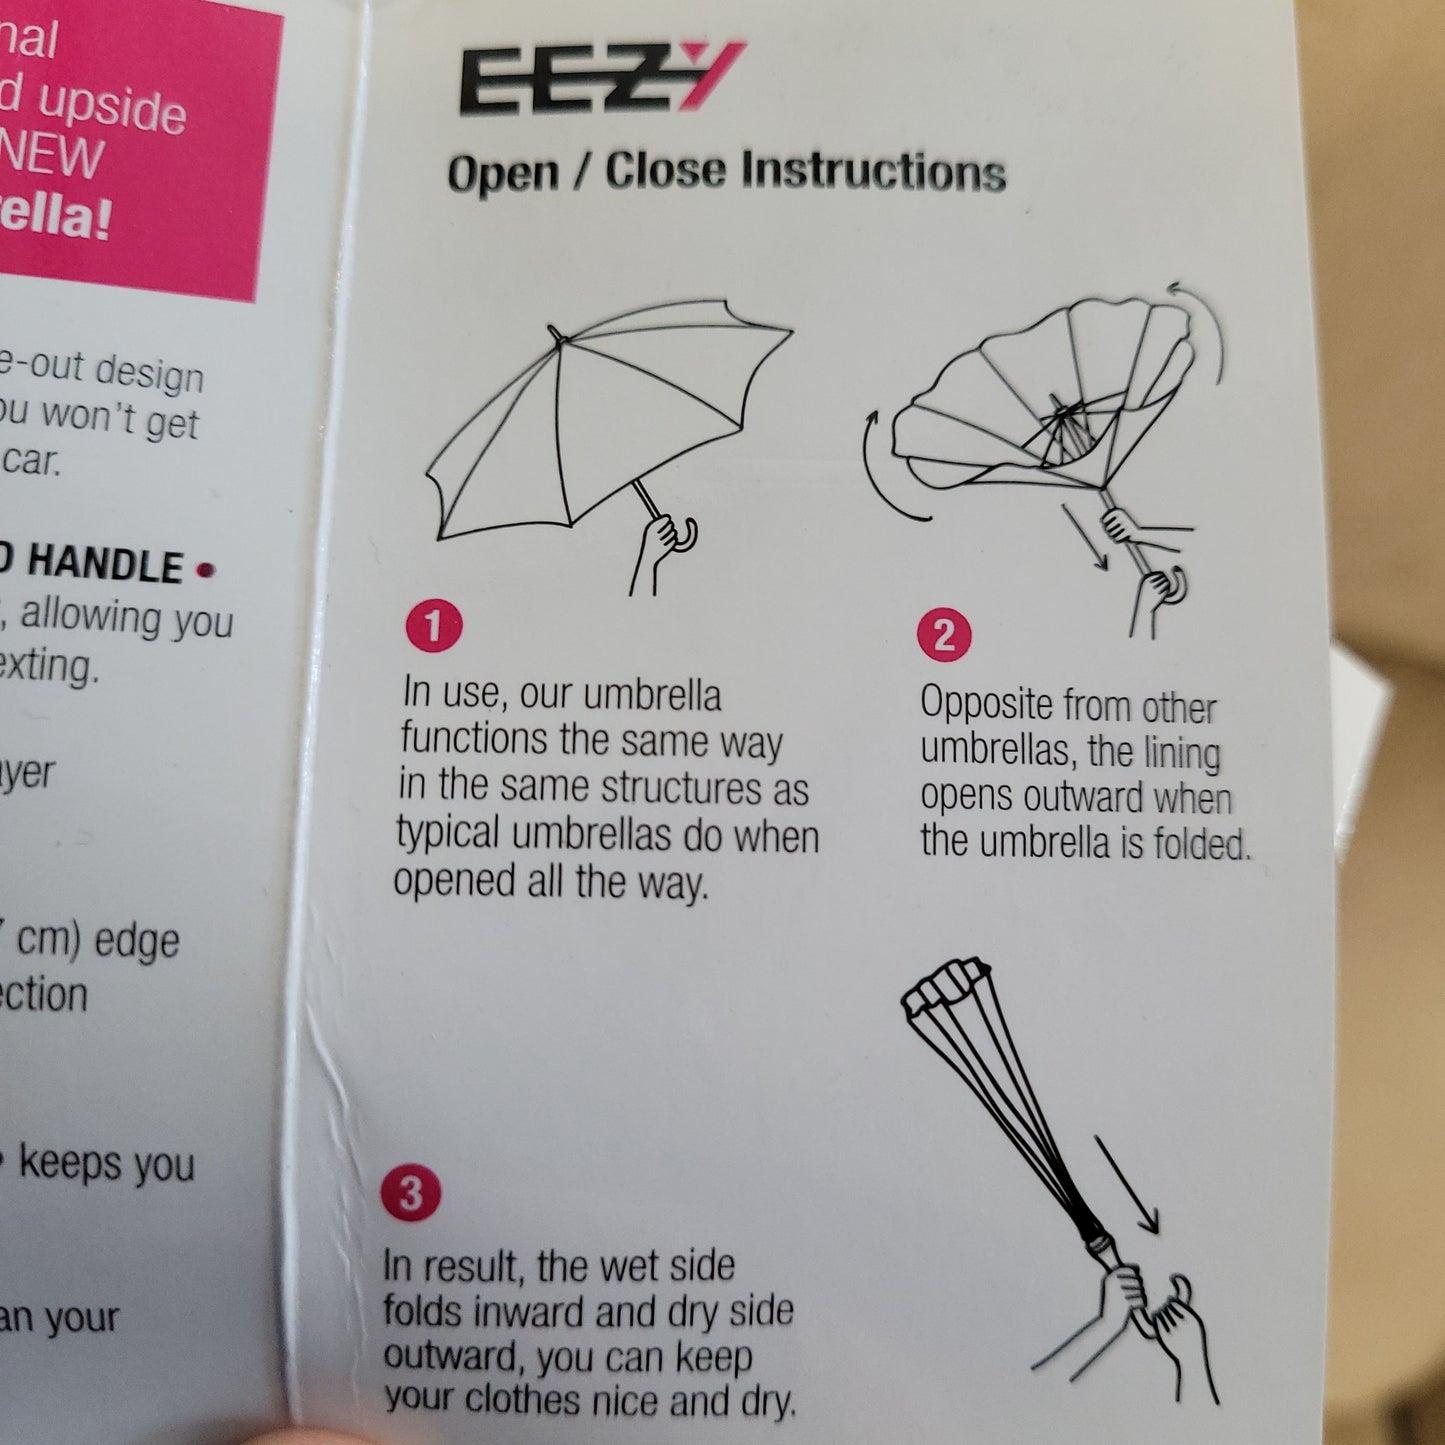 EEZ-Y Reverse/Inverted Windproof Umbrella - Collapses Upside Down